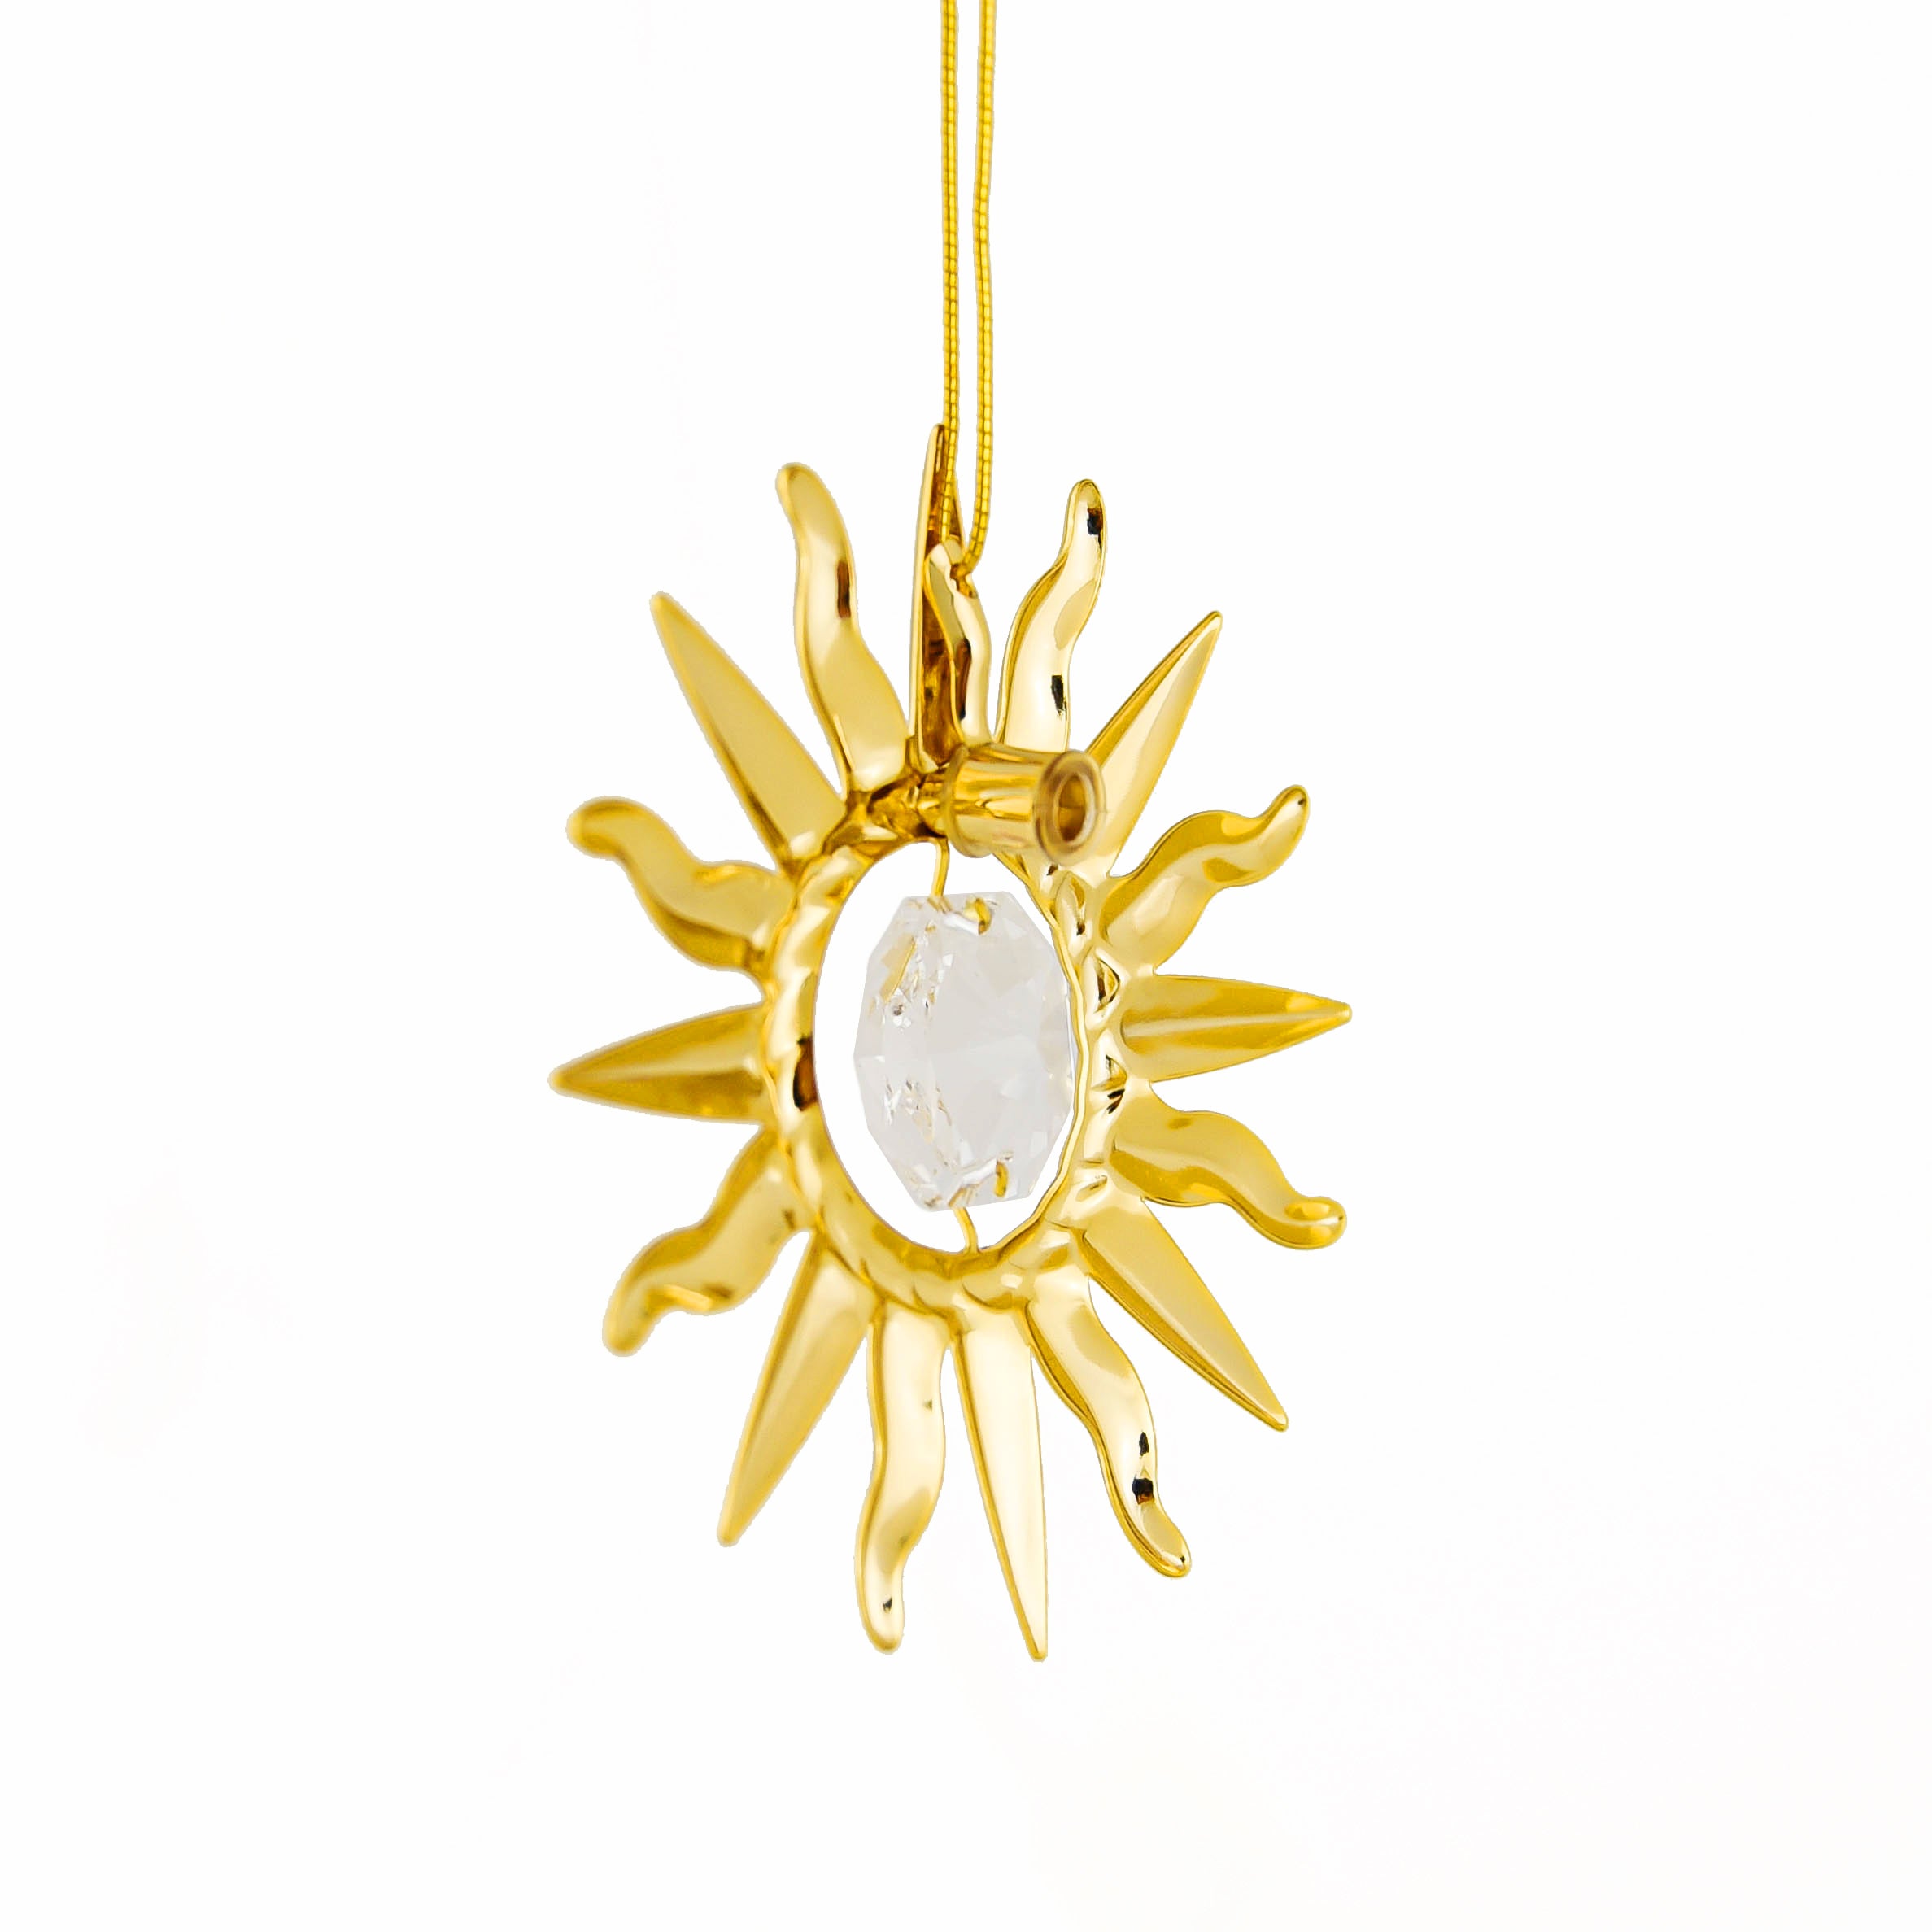 Sunburst Suncatcher Ornament